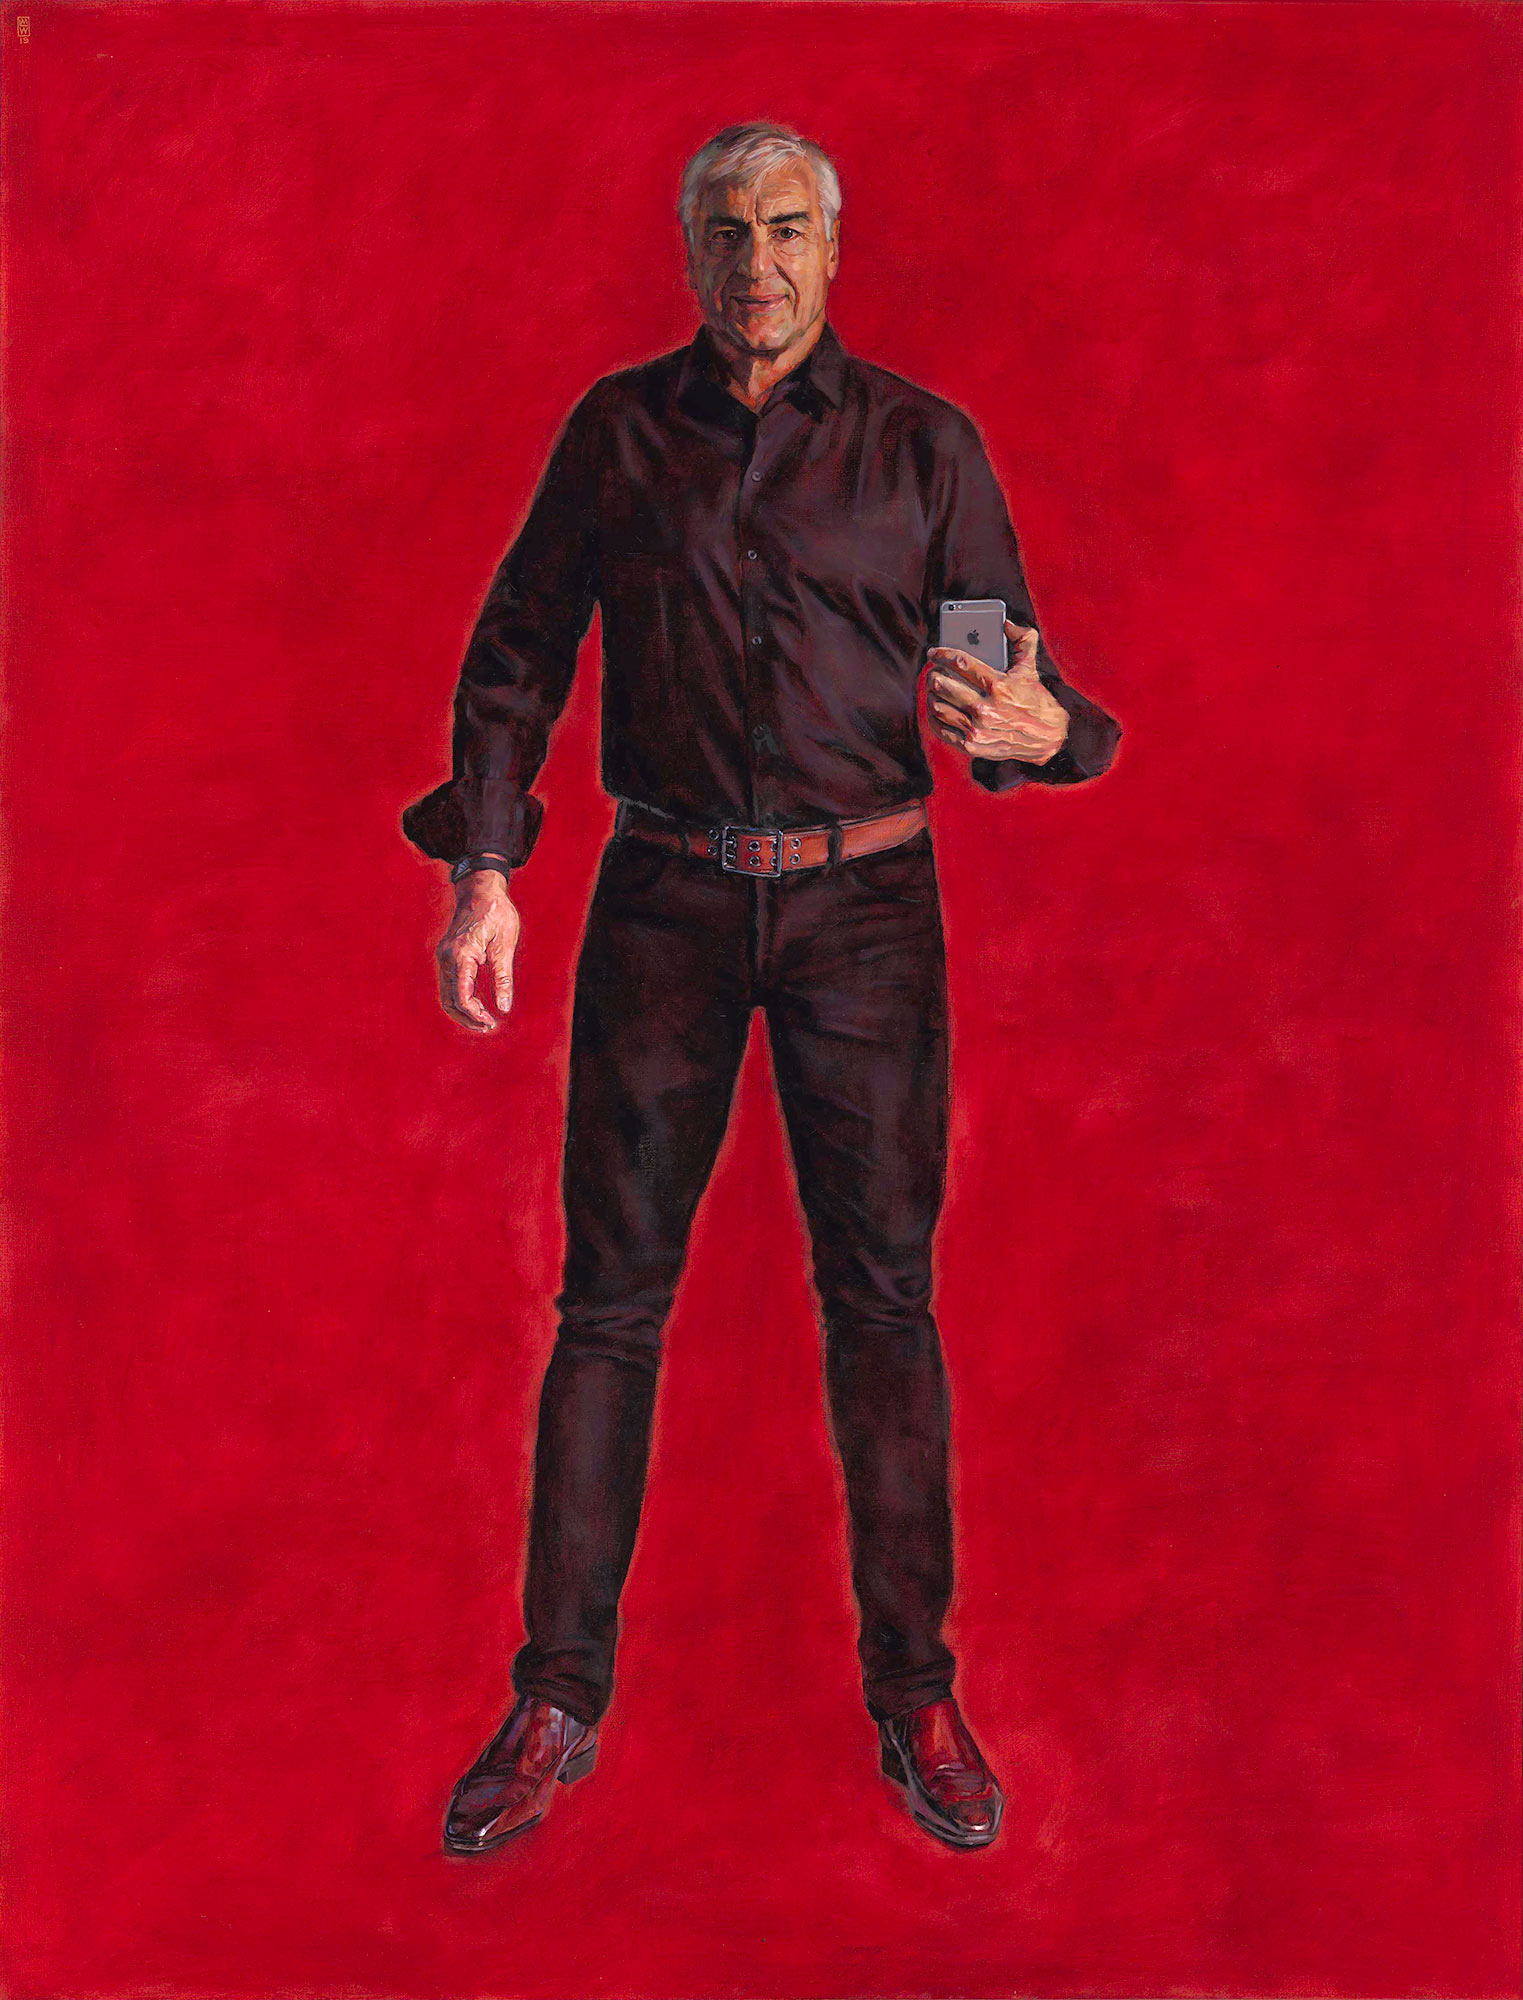 A-Man-In-Uniform---The-Selfie-(After-Warhol's-Elvis)_SMH_by_LMW_c.jpg